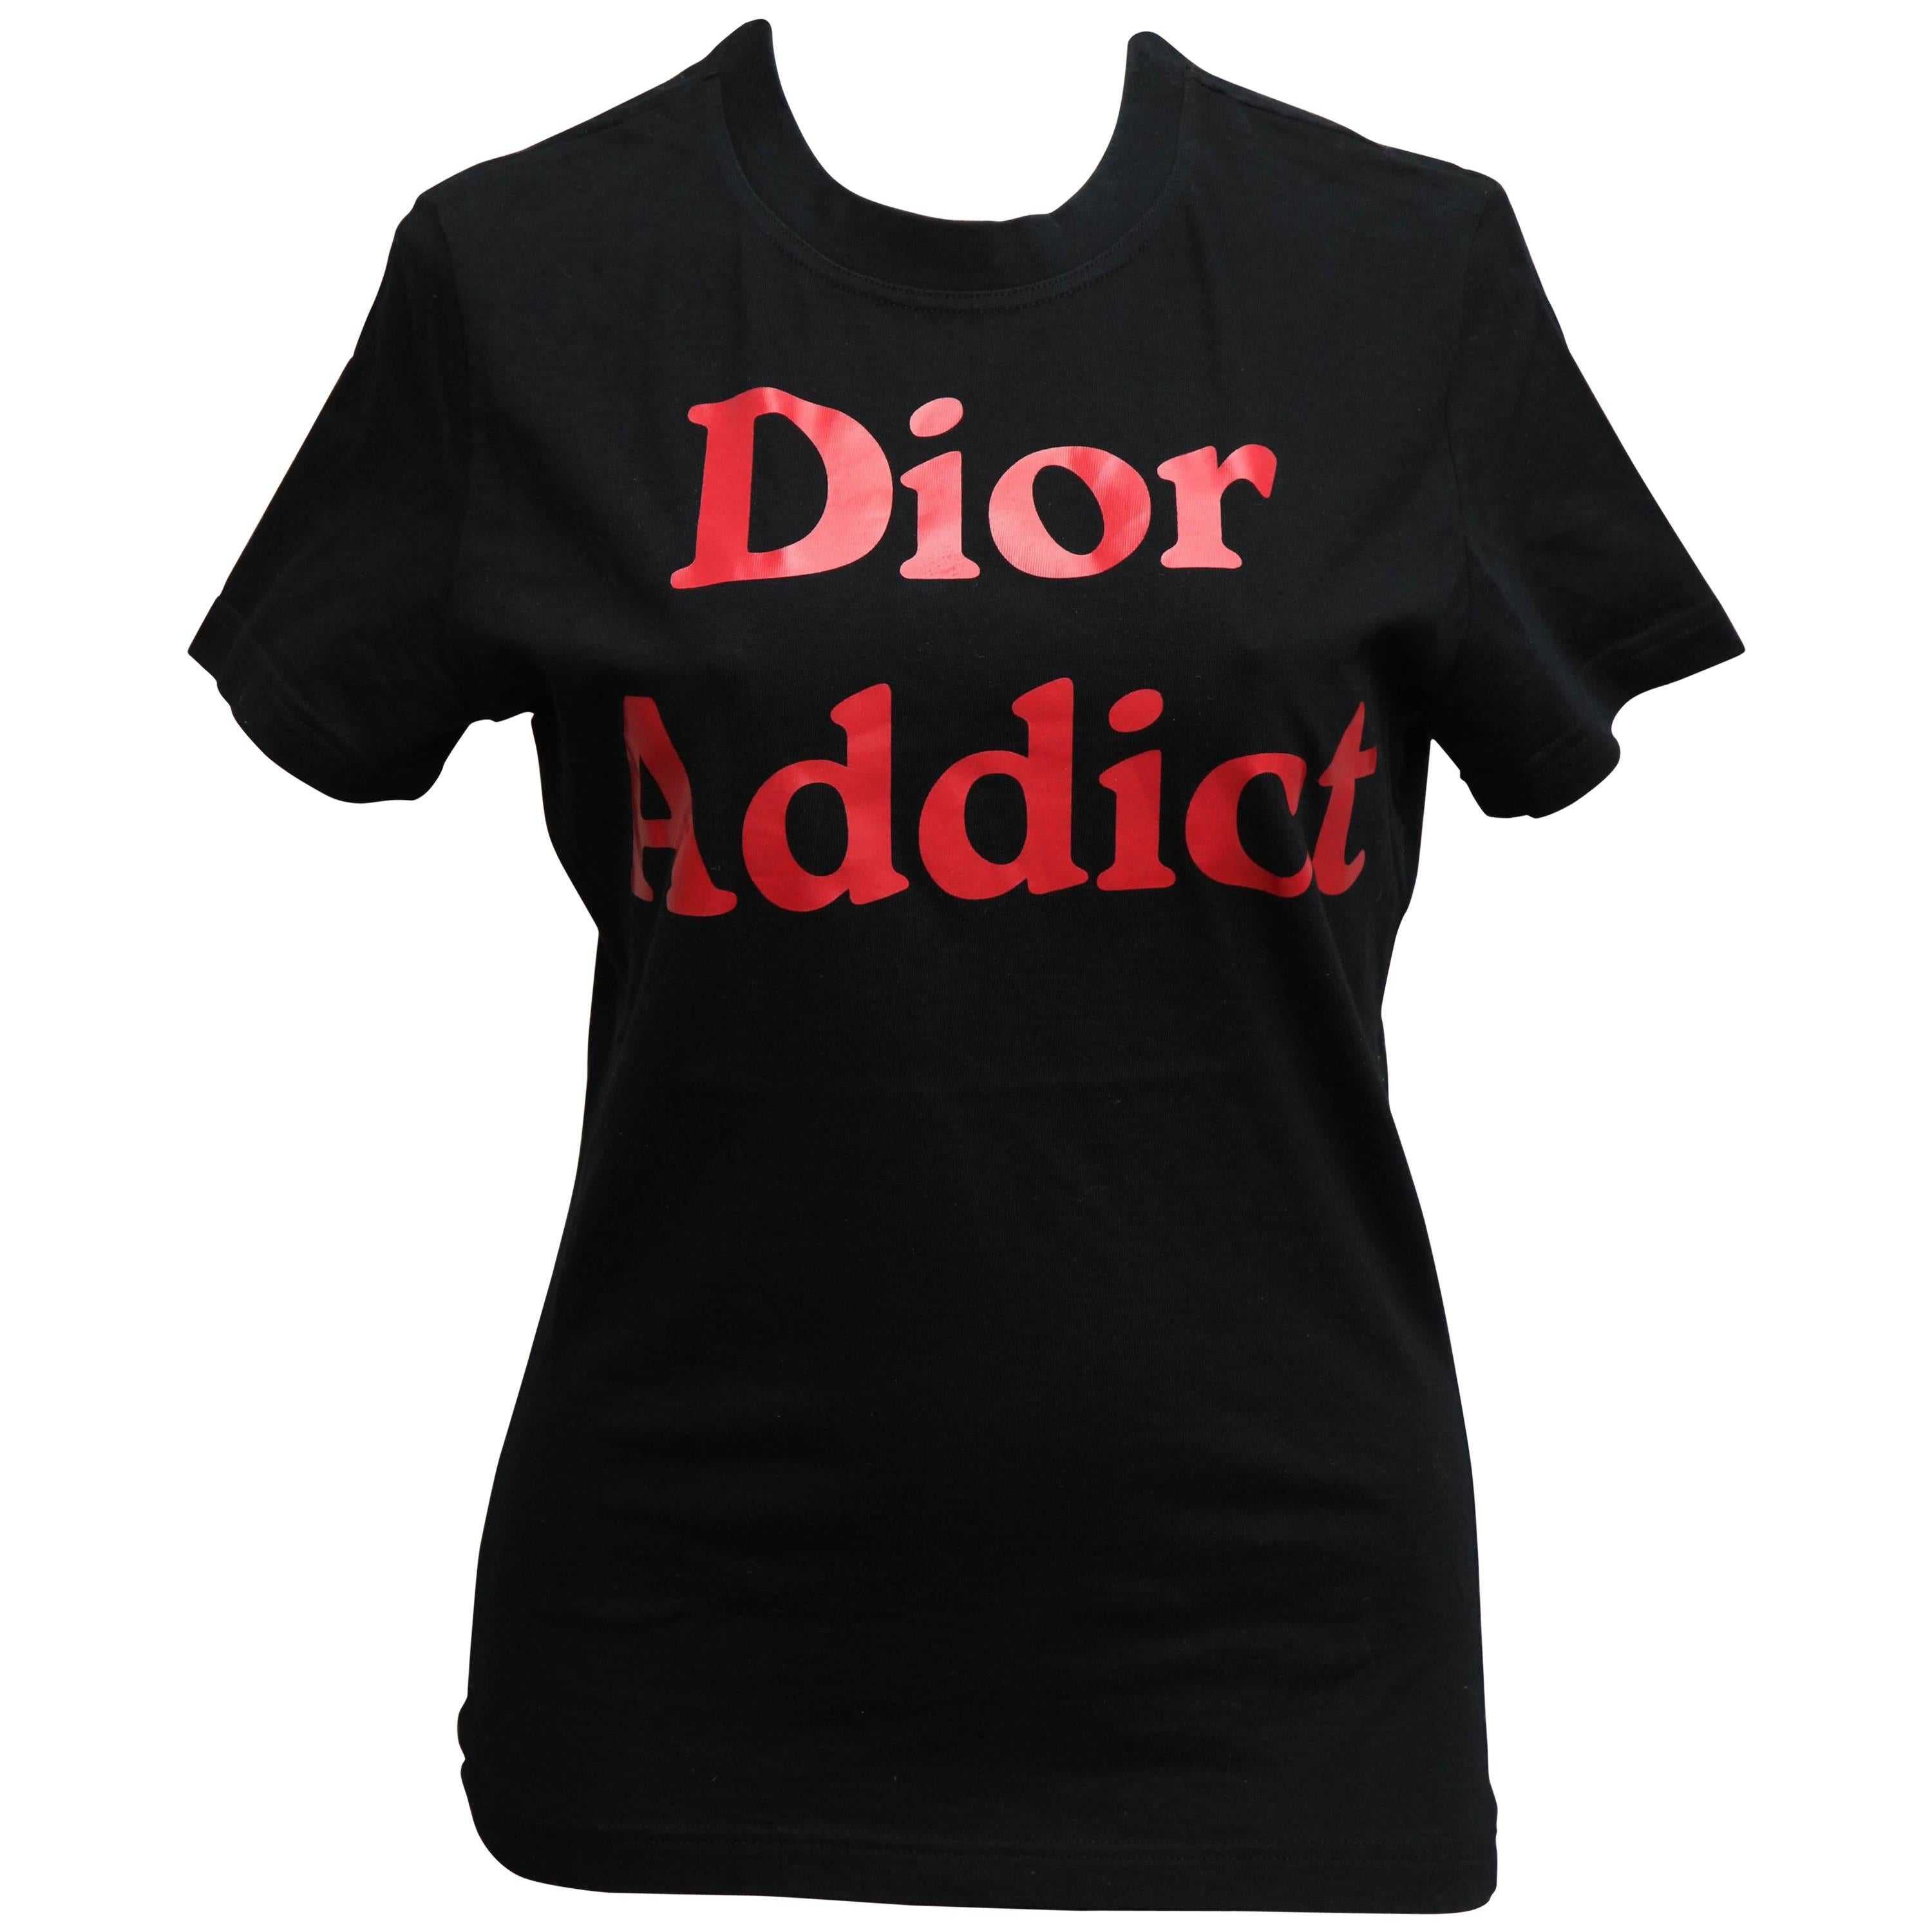 John Galliano for Christian Dior "Dior Addict" Red Tank Top T-Shirt 